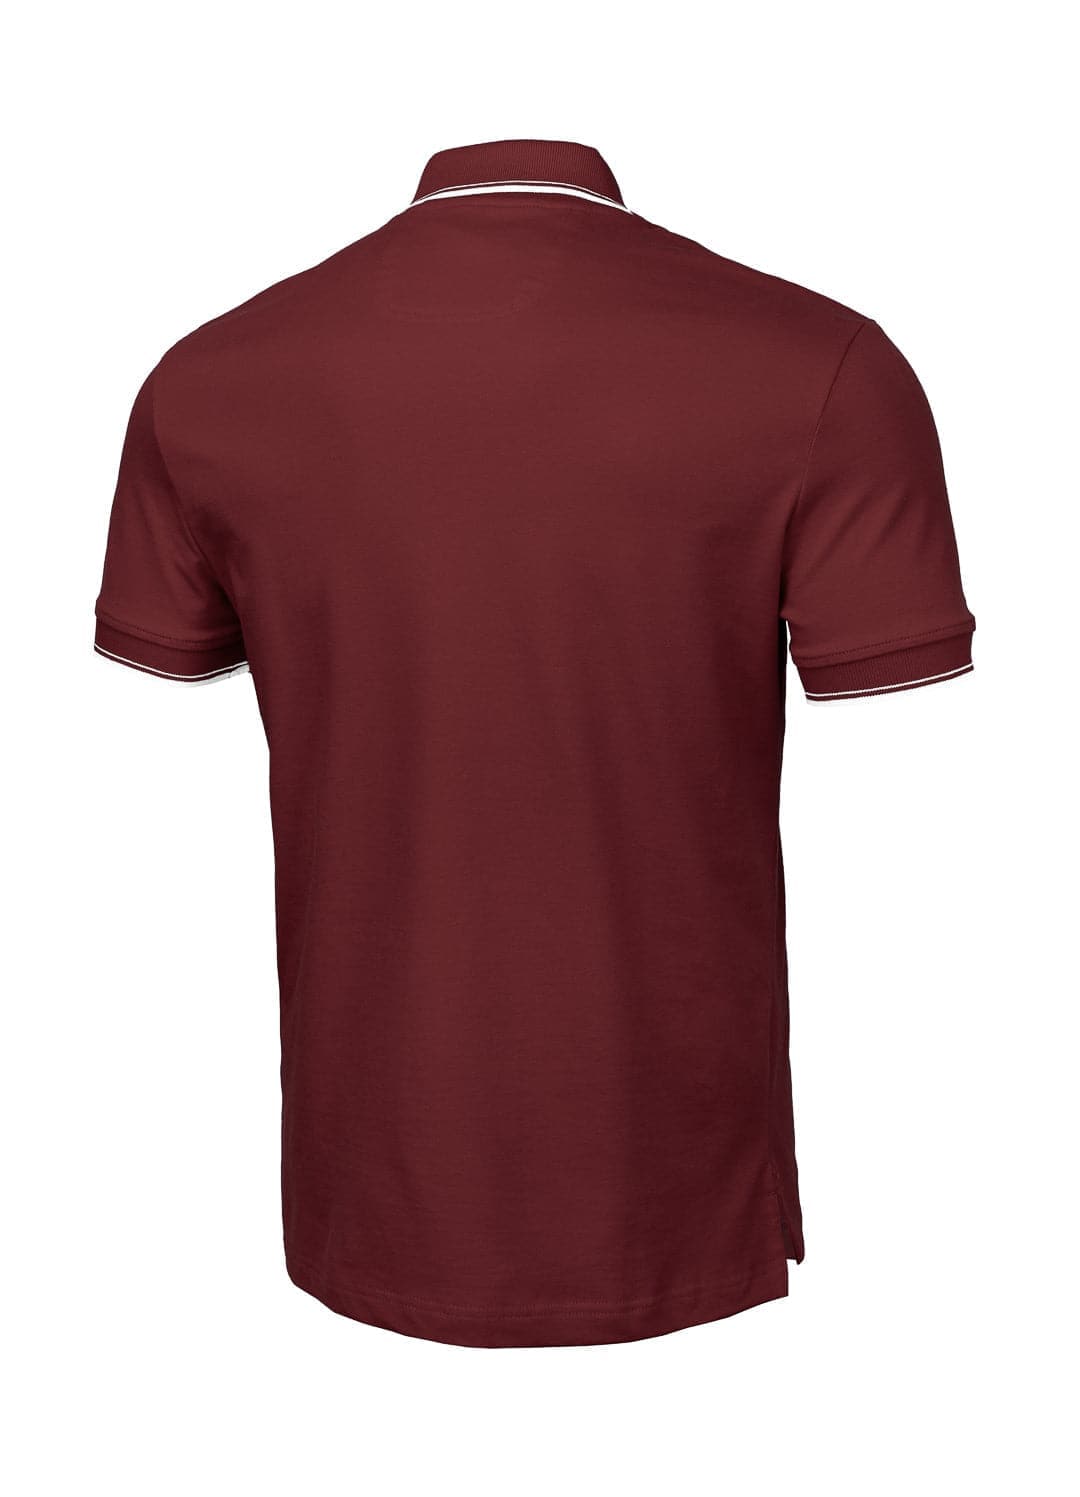 POLO REGULAR STRIPES Spandex Burgundy T-shirt.